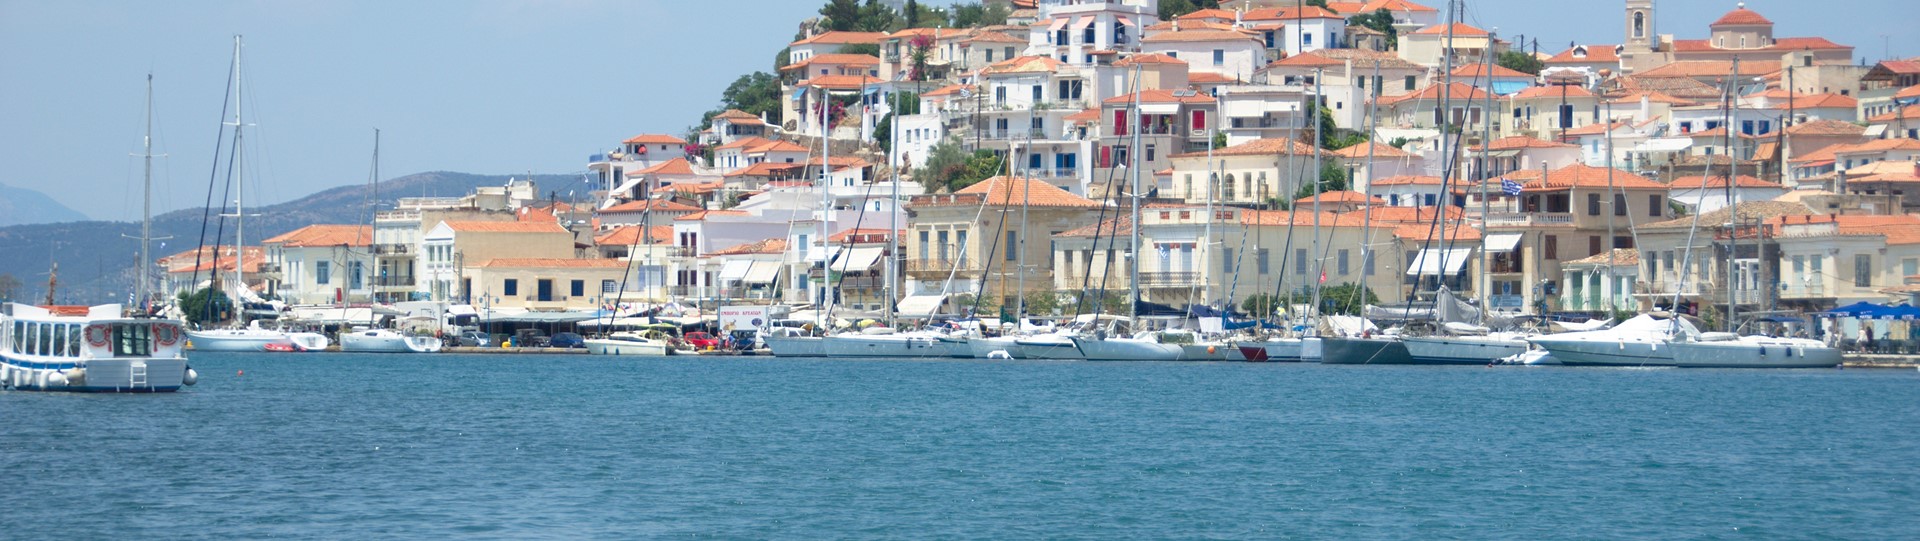 Het idyllische Griekse eiland Poros